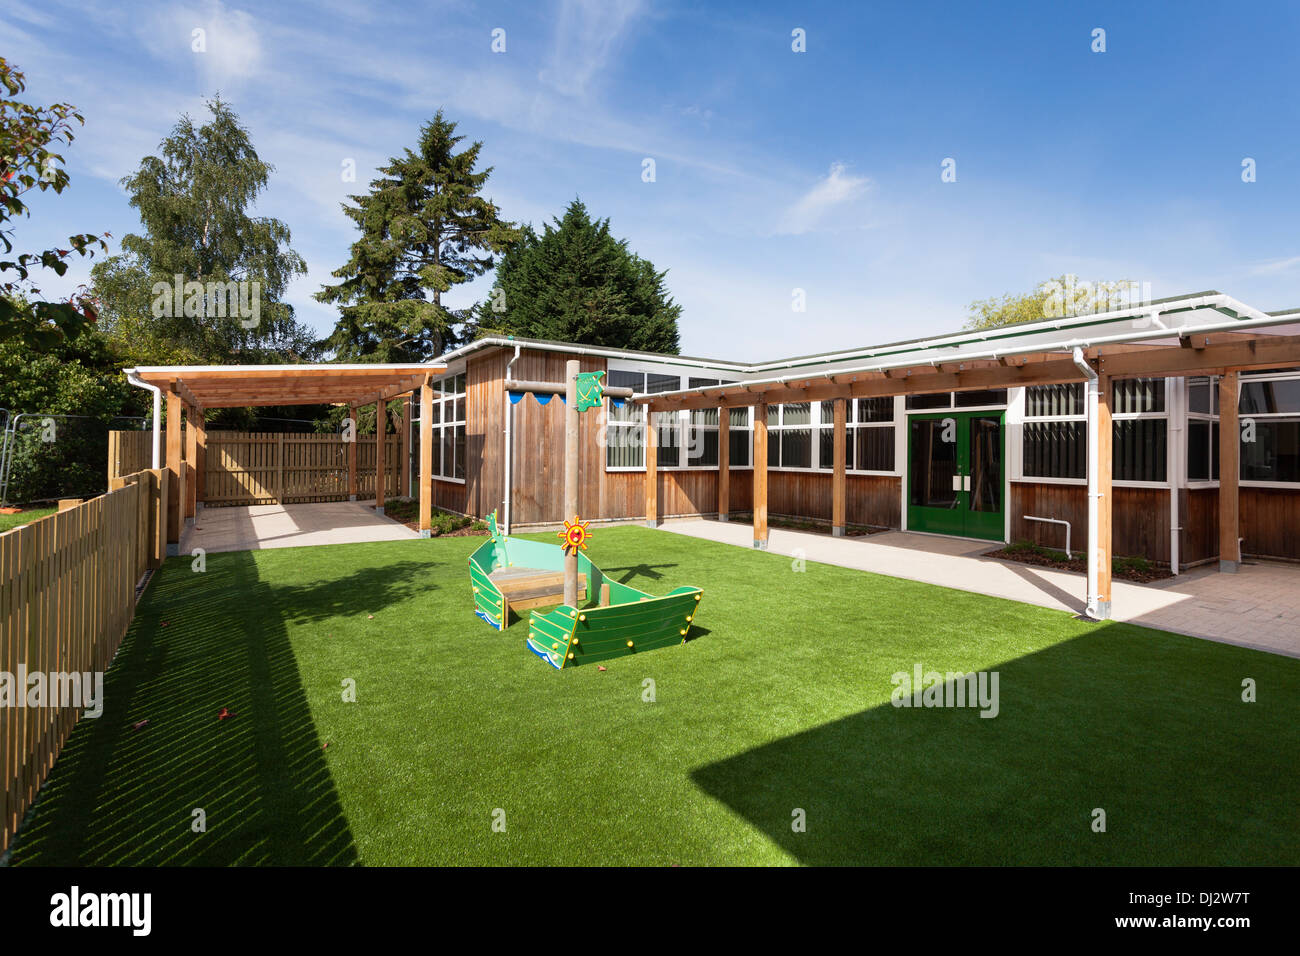 Infant School eingezäunte Grünfläche Spielplatz mit Holz verkleideten Klassenräume. Stockfoto